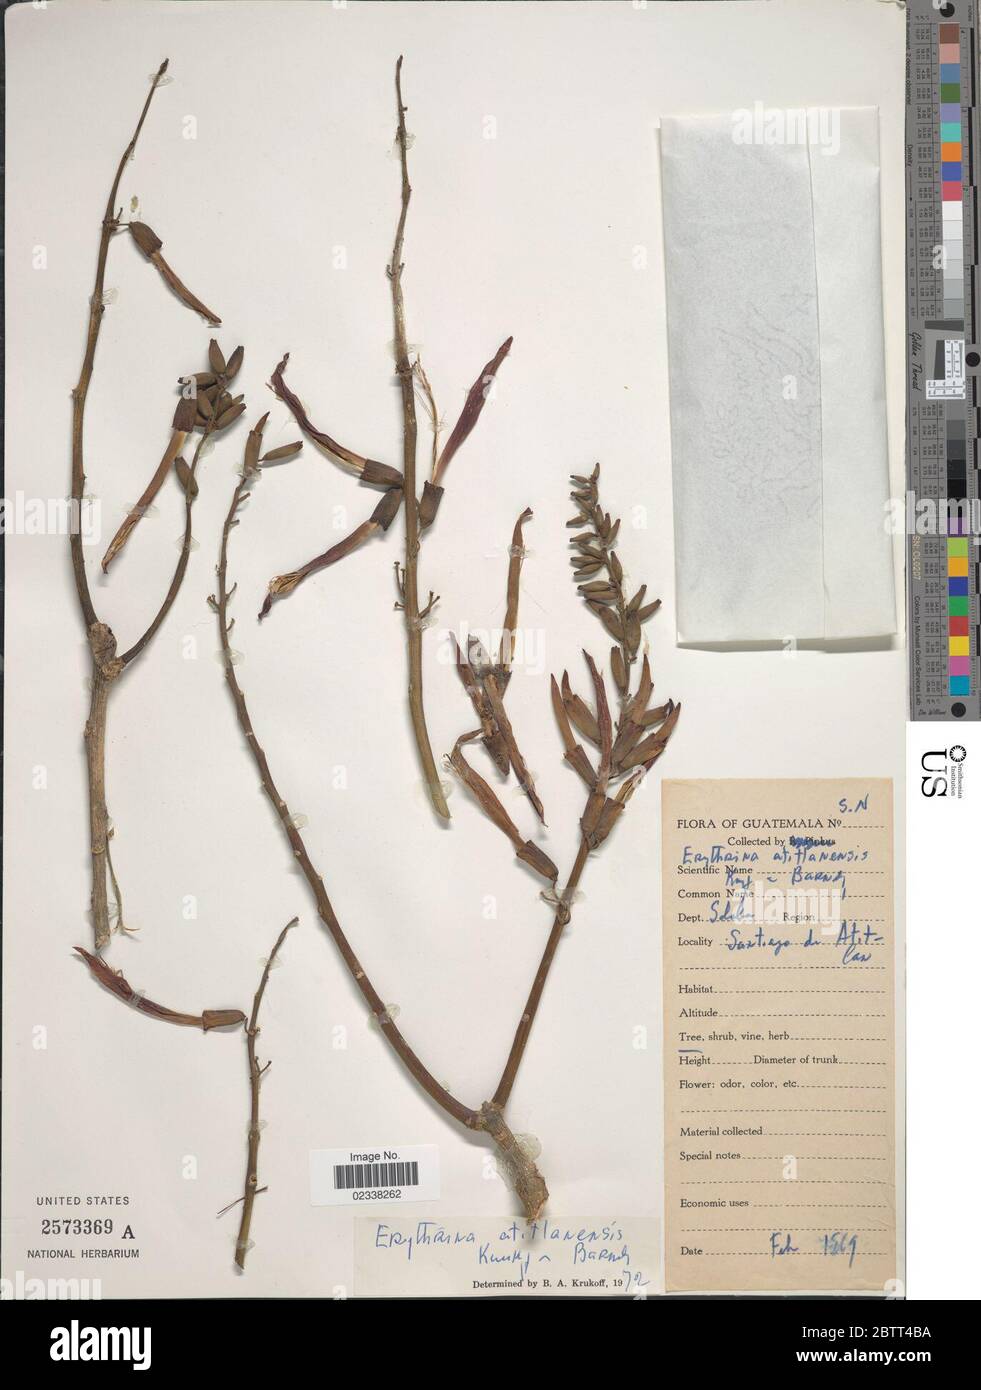 Erythrina atitlanensis Krukoff Barneby. Stock Photo